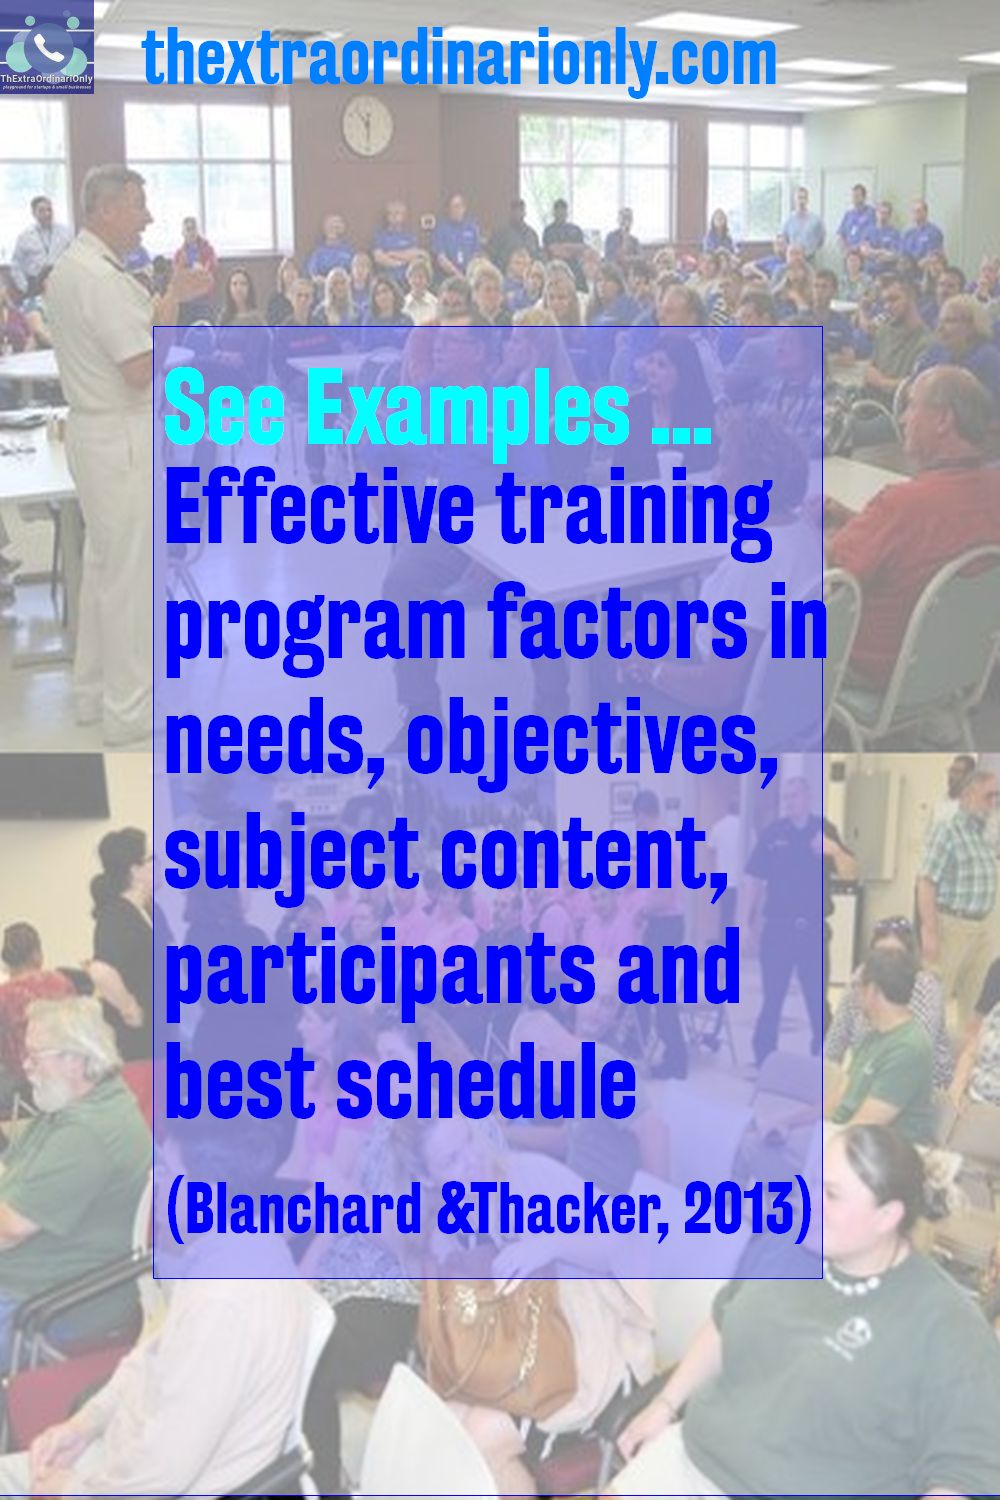 Effective training program factors in needs, objectives, subject content, participants and best schedule (Blanchard &Thacker, 2013)